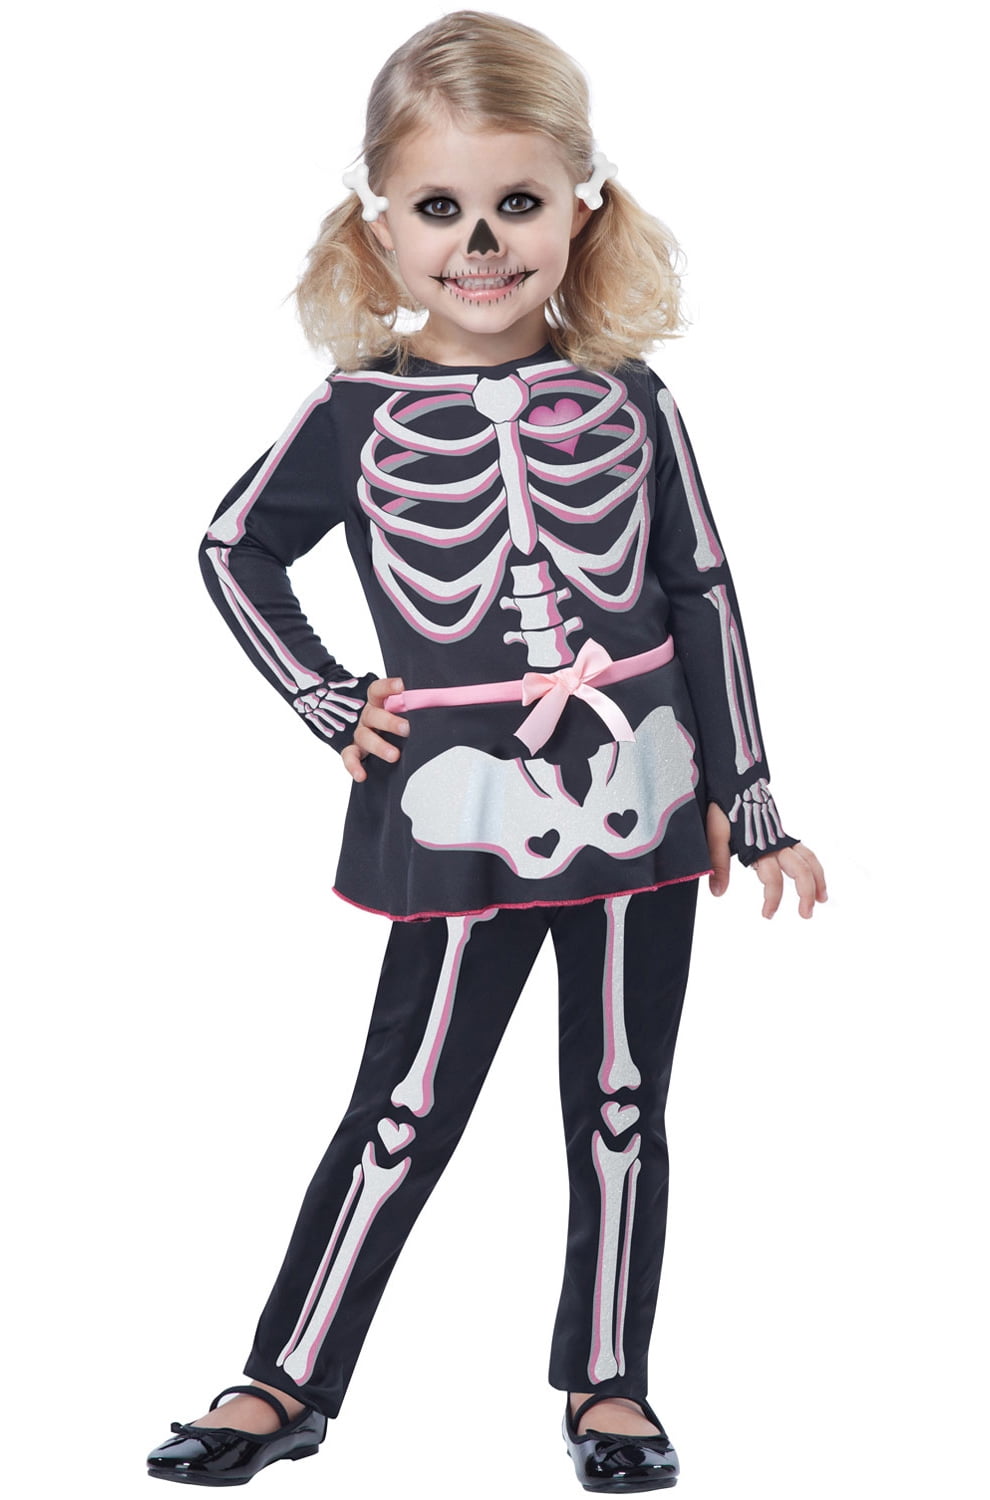 Itty Bitty Bones - Walmart.com